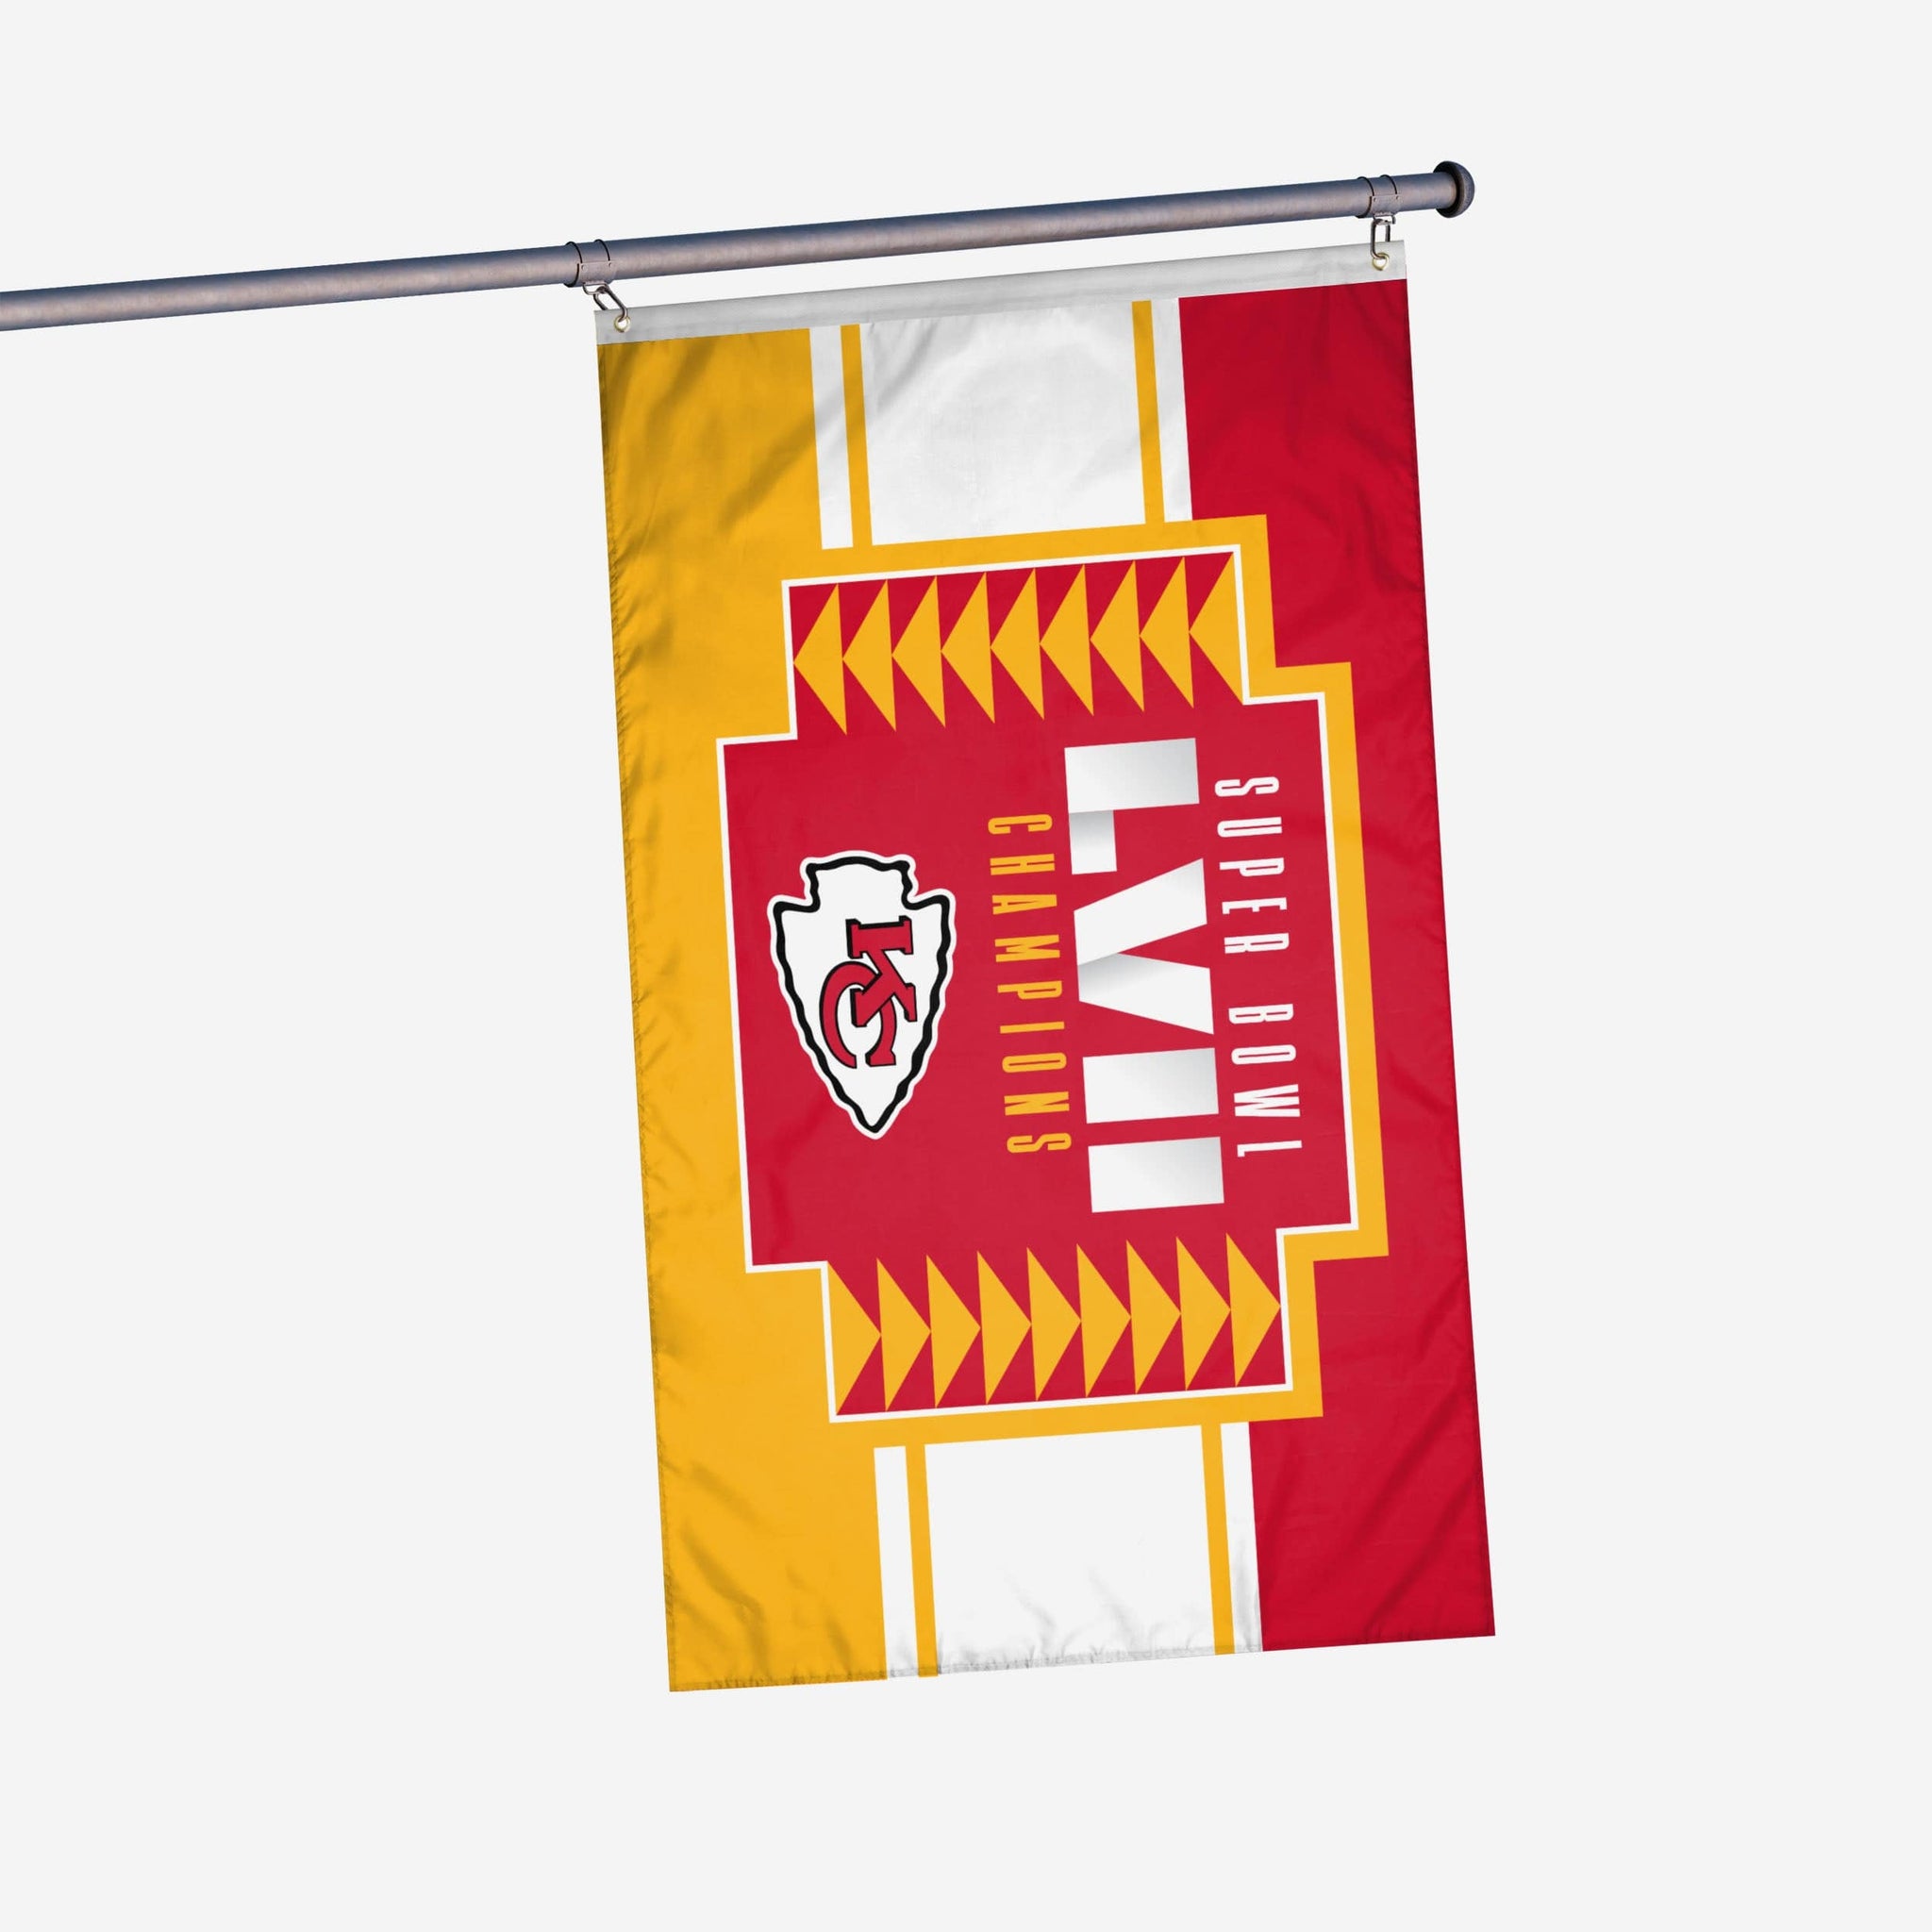 Kansas City Chiefs Super Bowl LVII Champions flags on sale